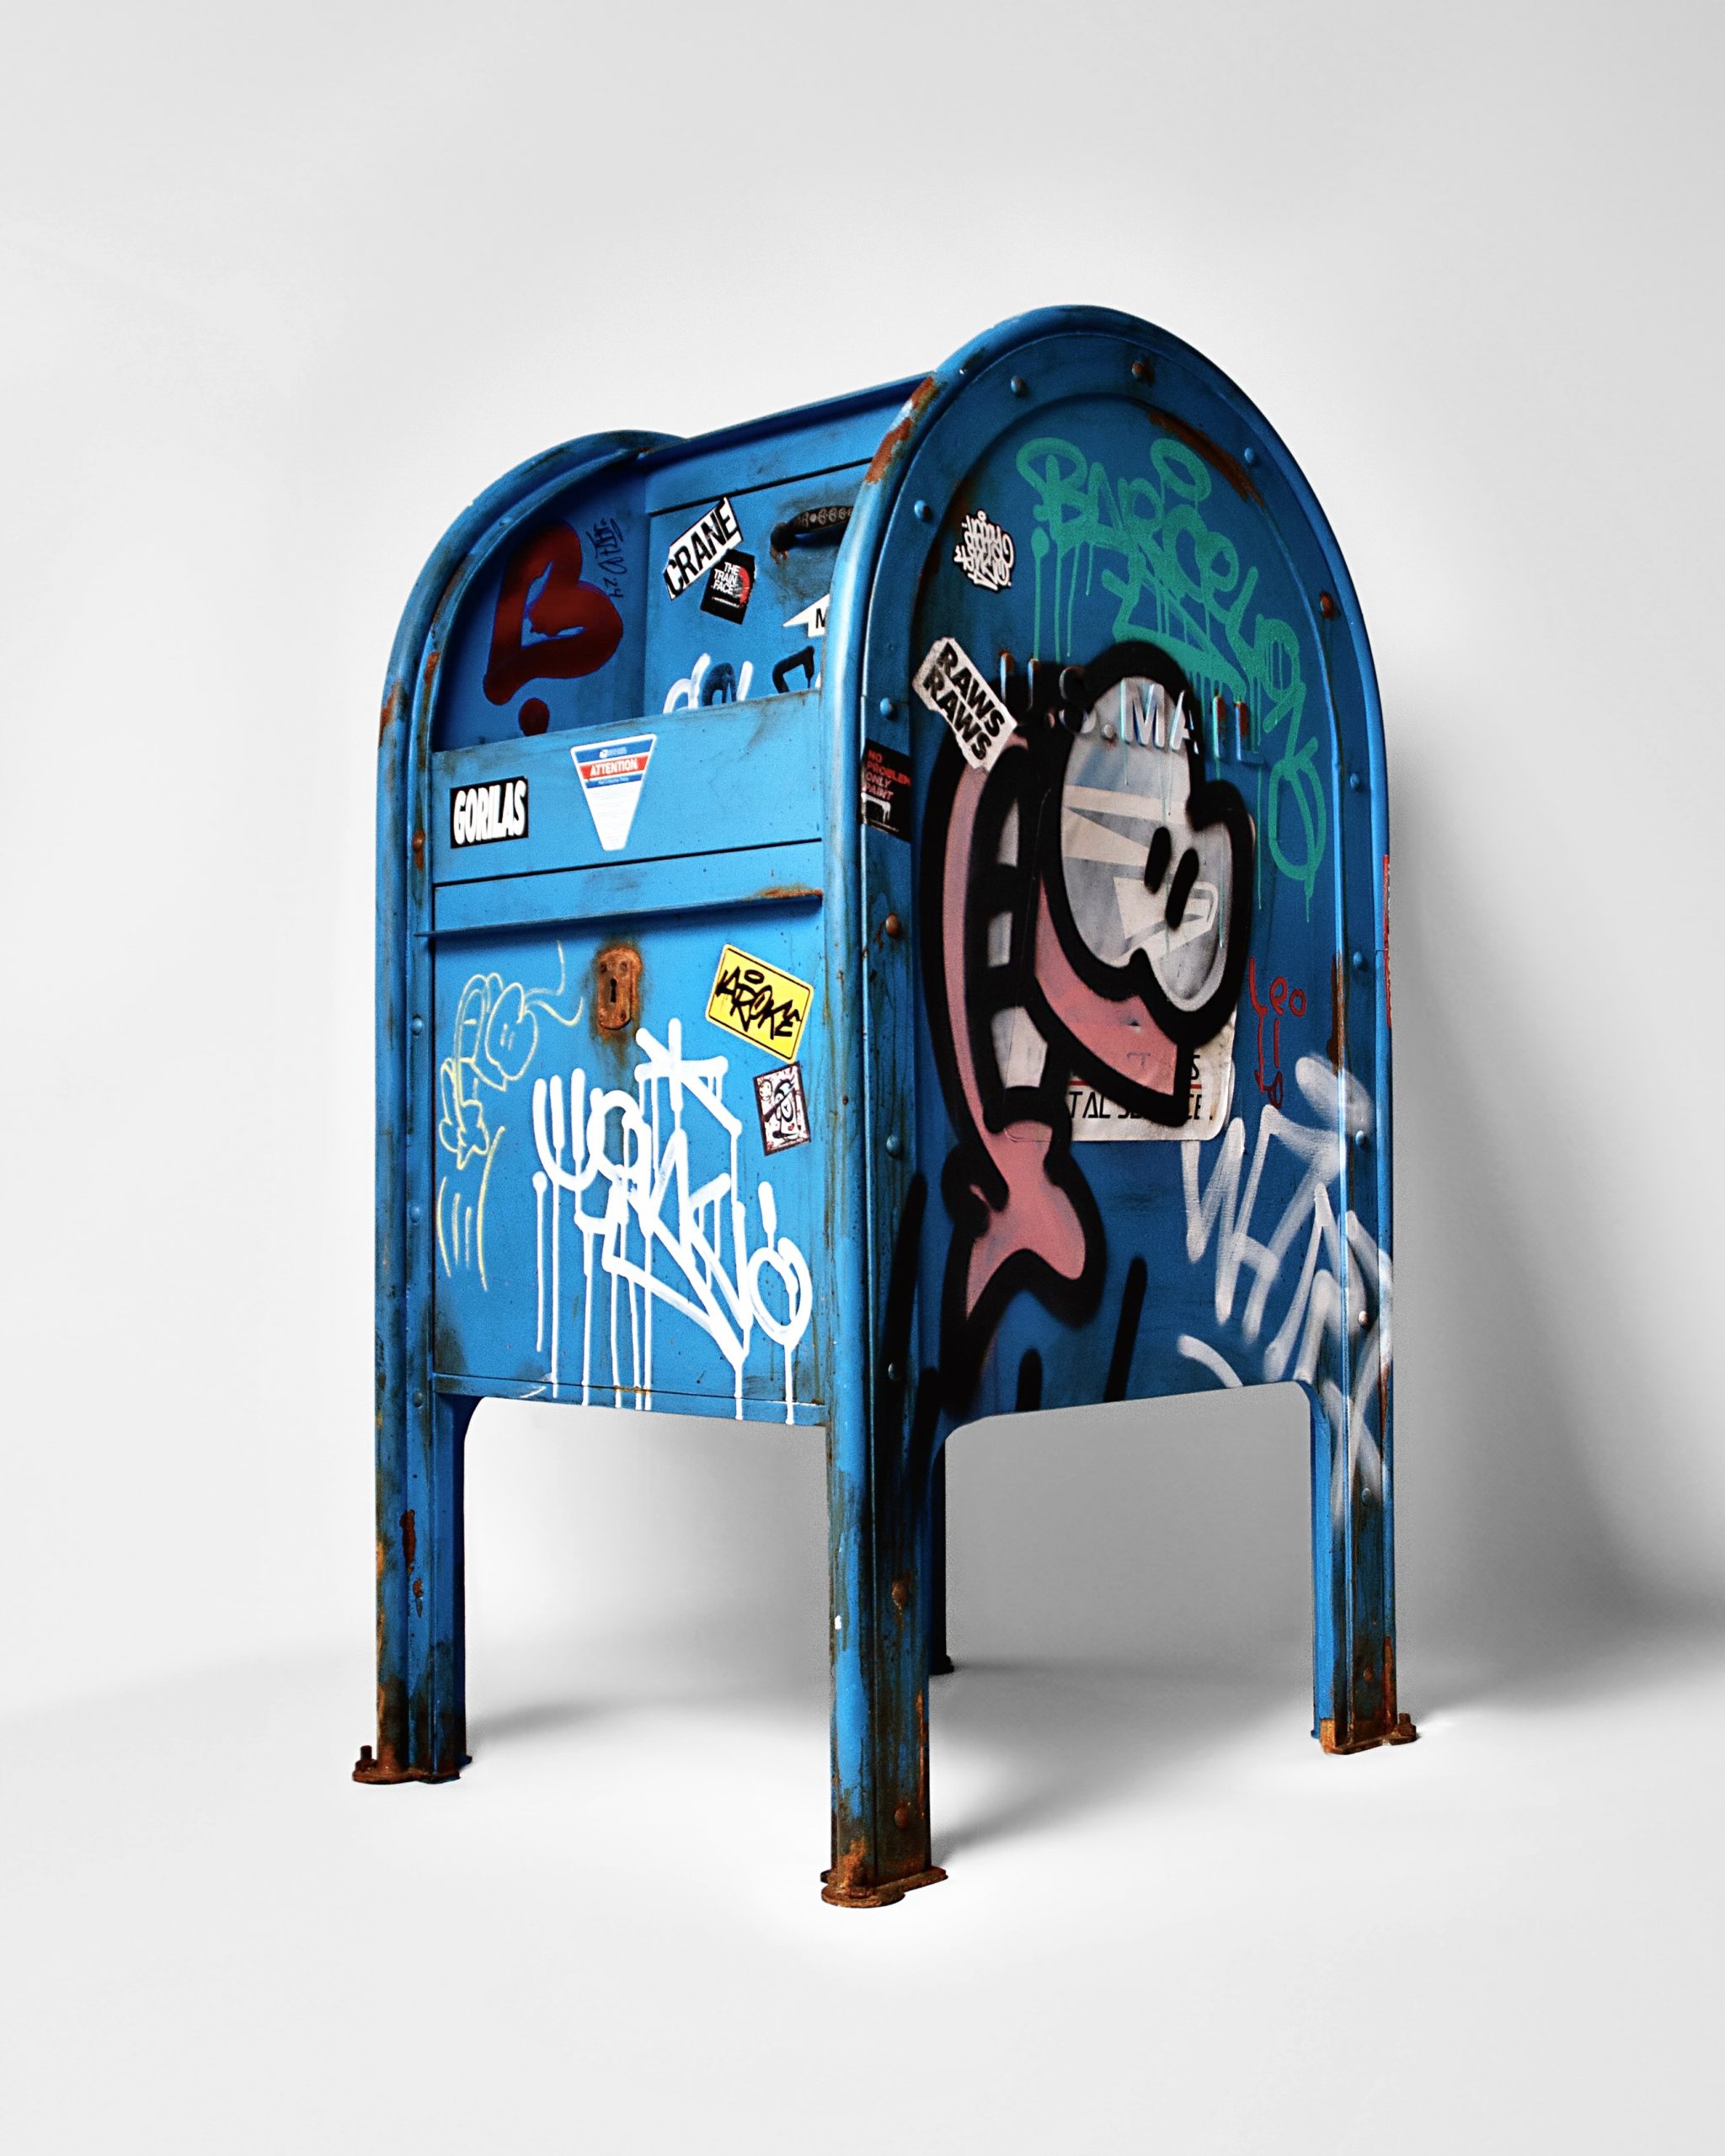 Street art, graffiti and urban contemporary art gallery in Barcelona